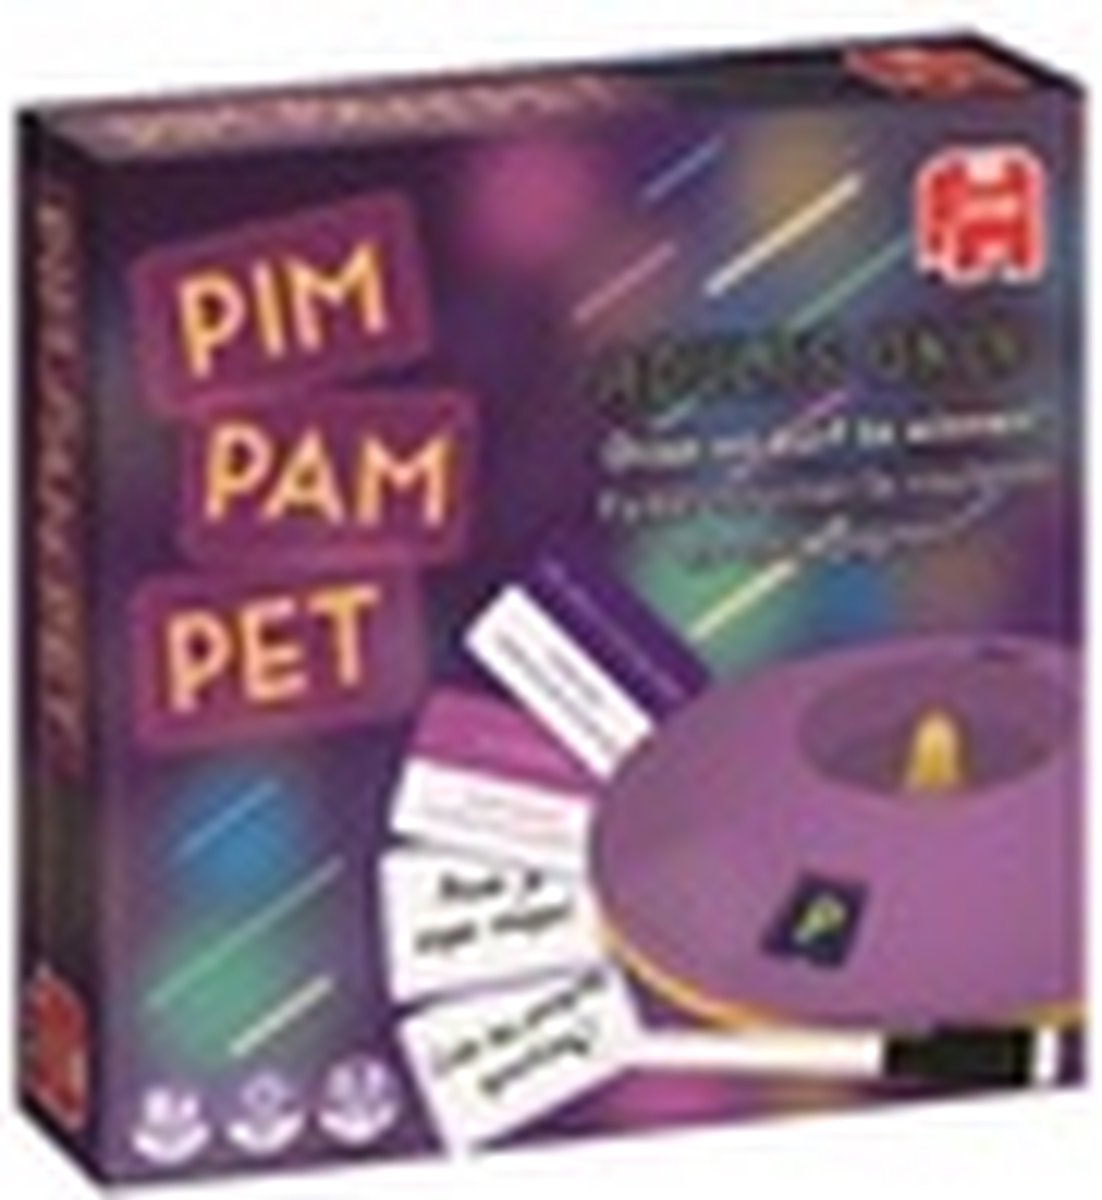 Pim Pam Pet Adults Only - Actiespel | Games | bol.com